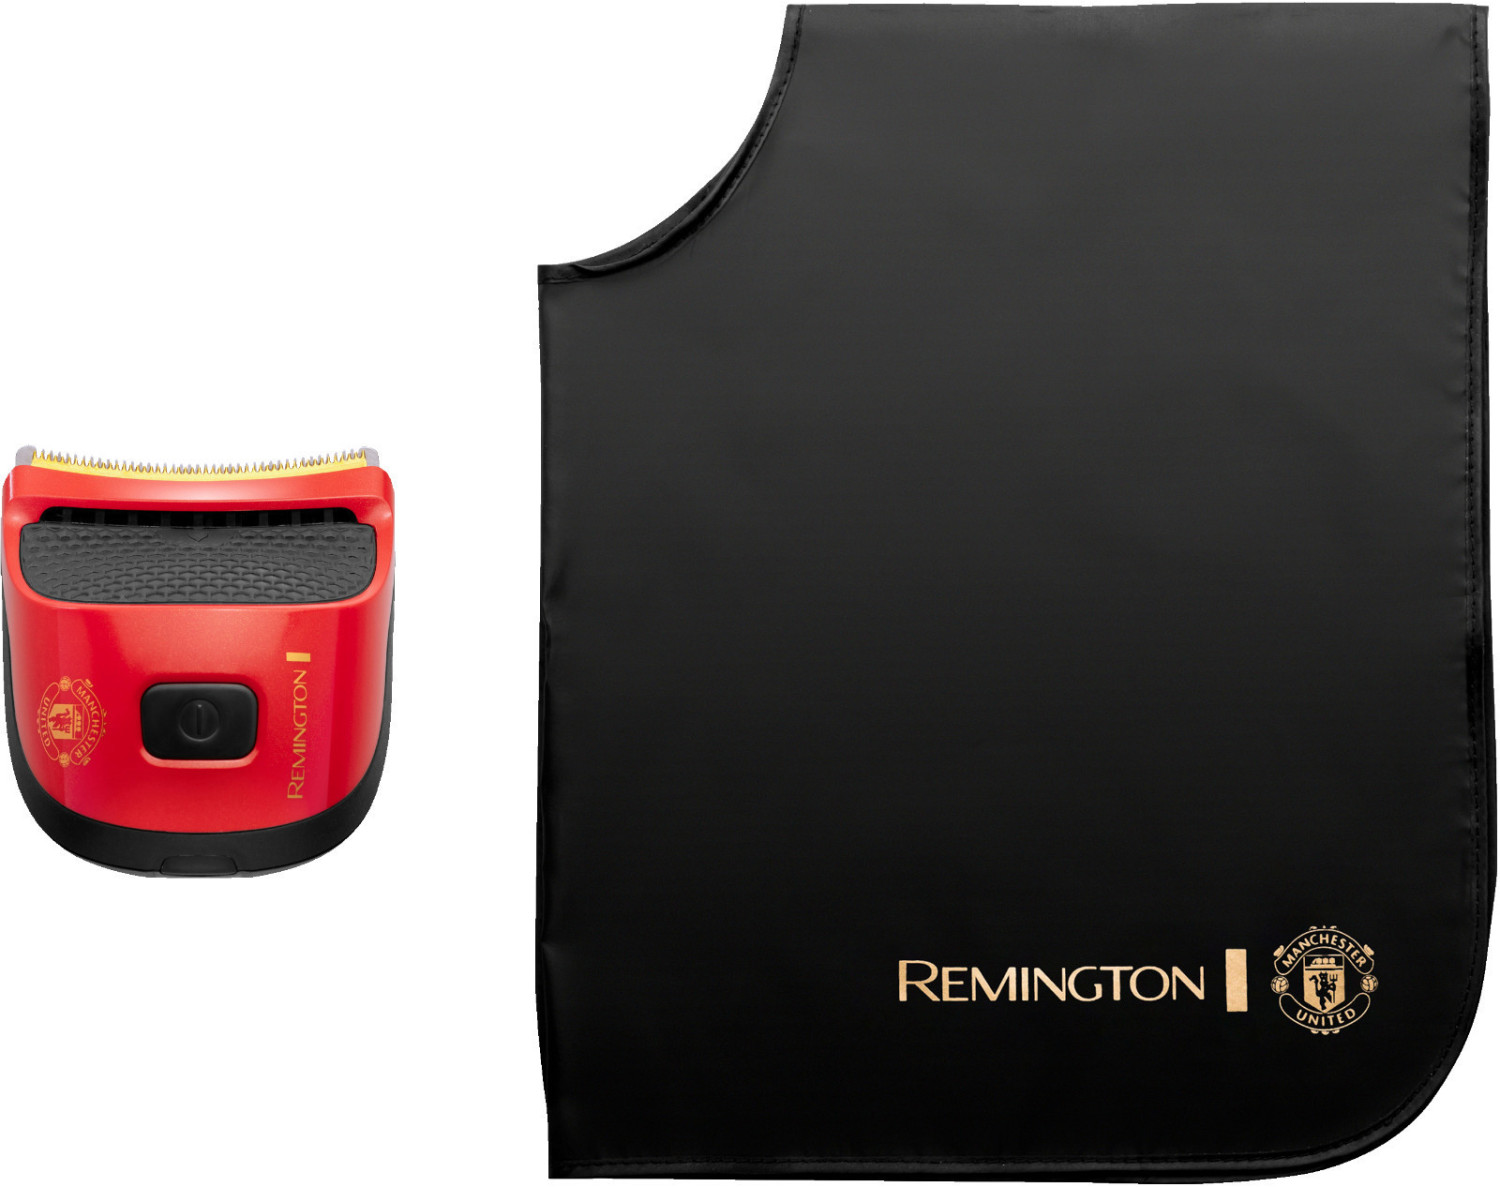 Remington HC4225 Manchester Quick ab Preisvergleich bei | Colour 66,99 € United Cut